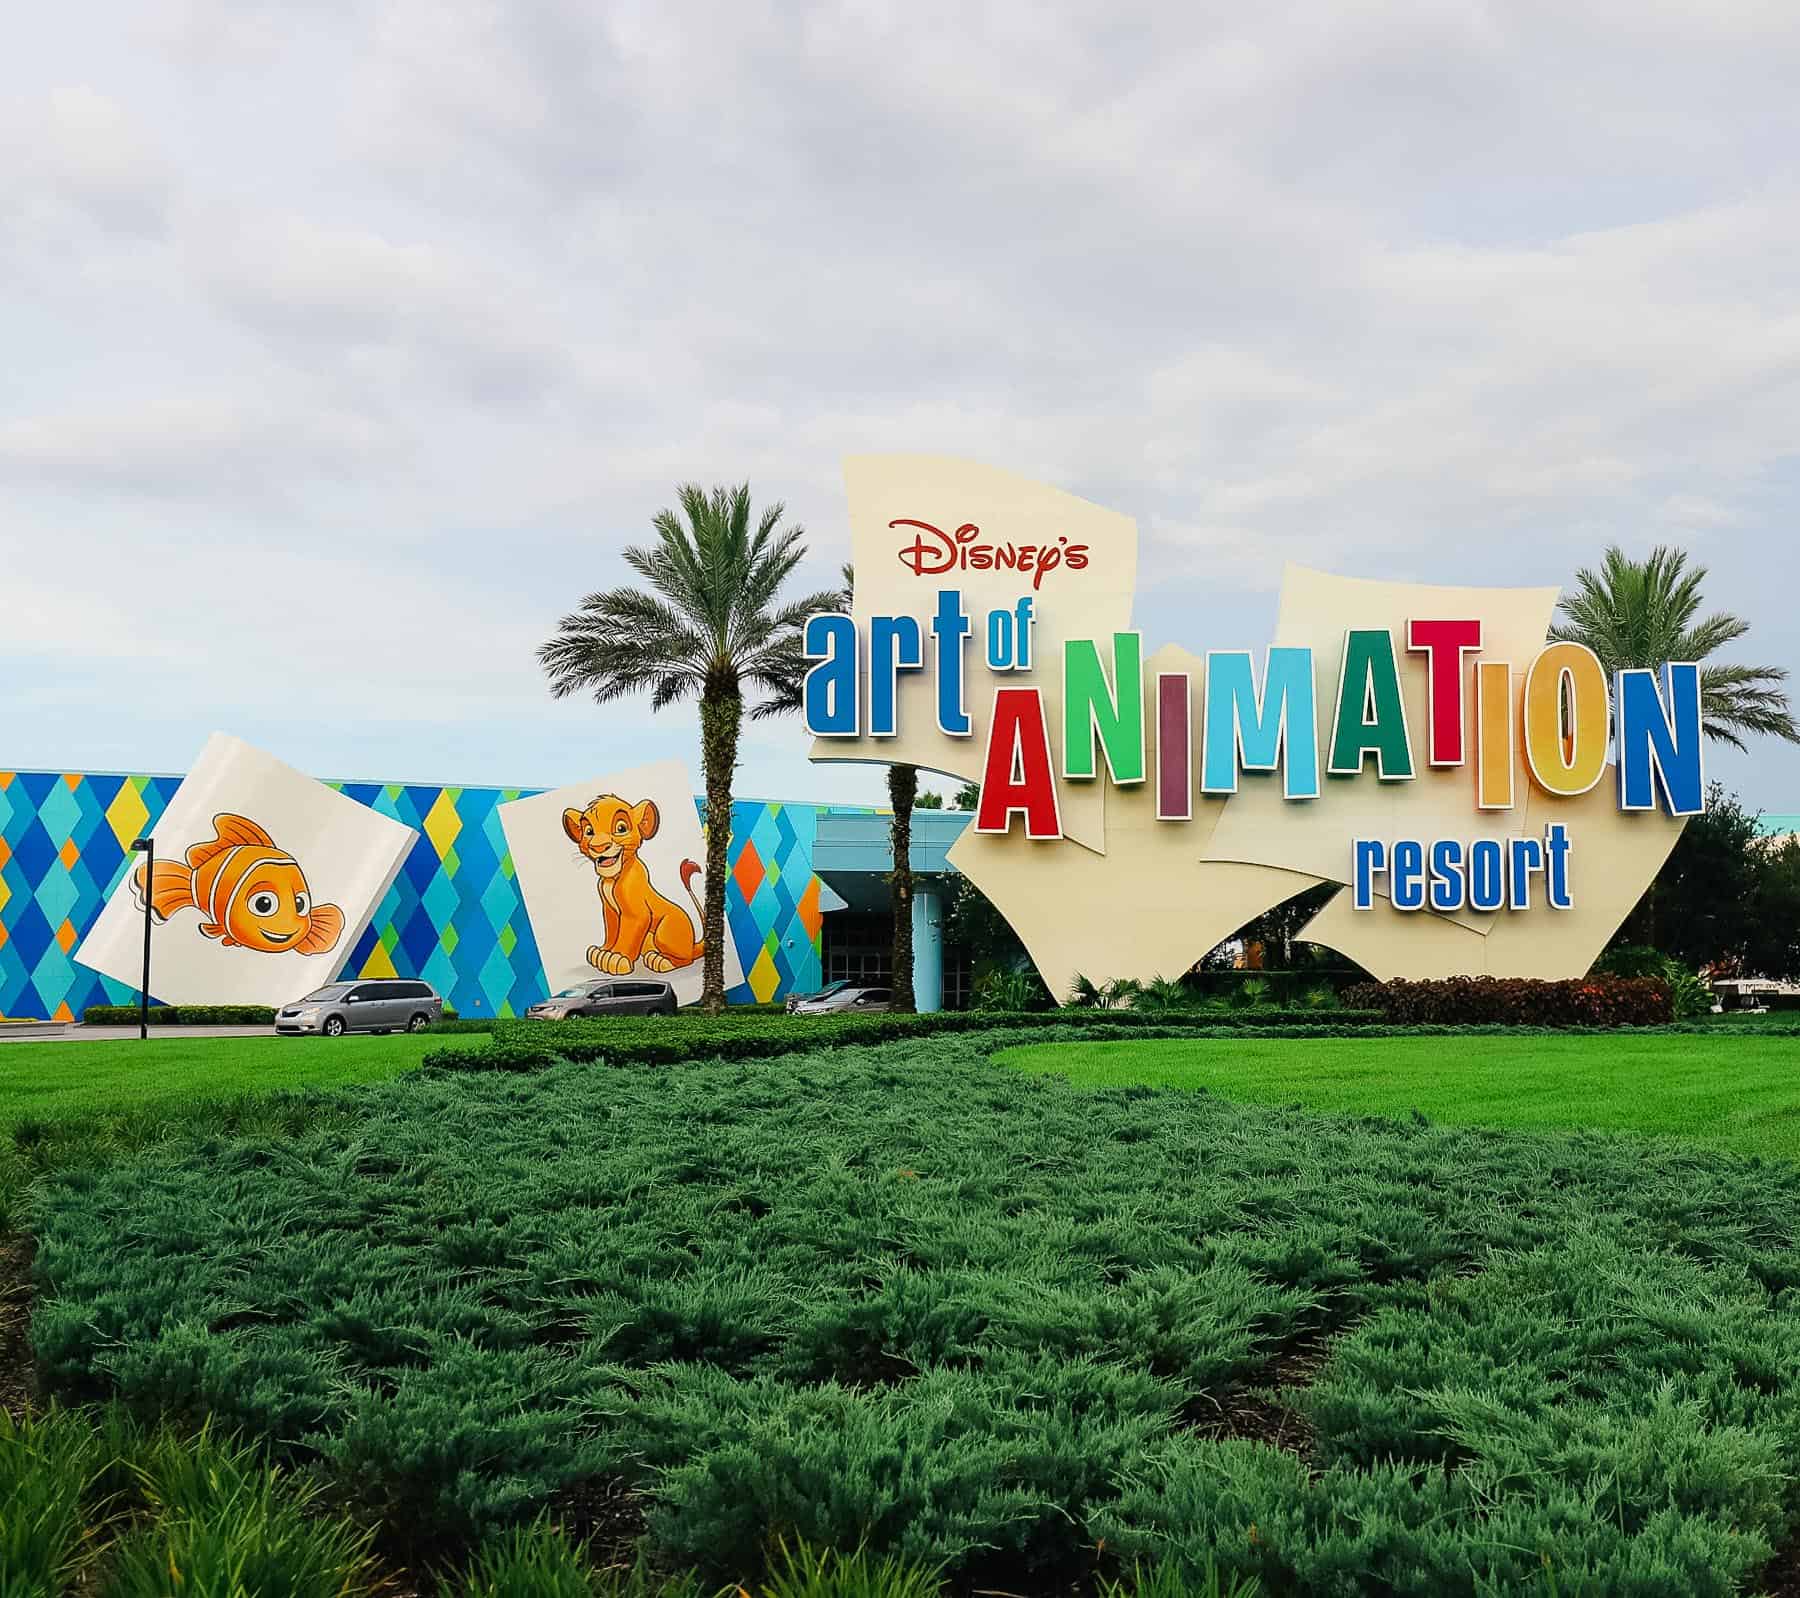 the main entrance of Disney's Art of Animation Resort 